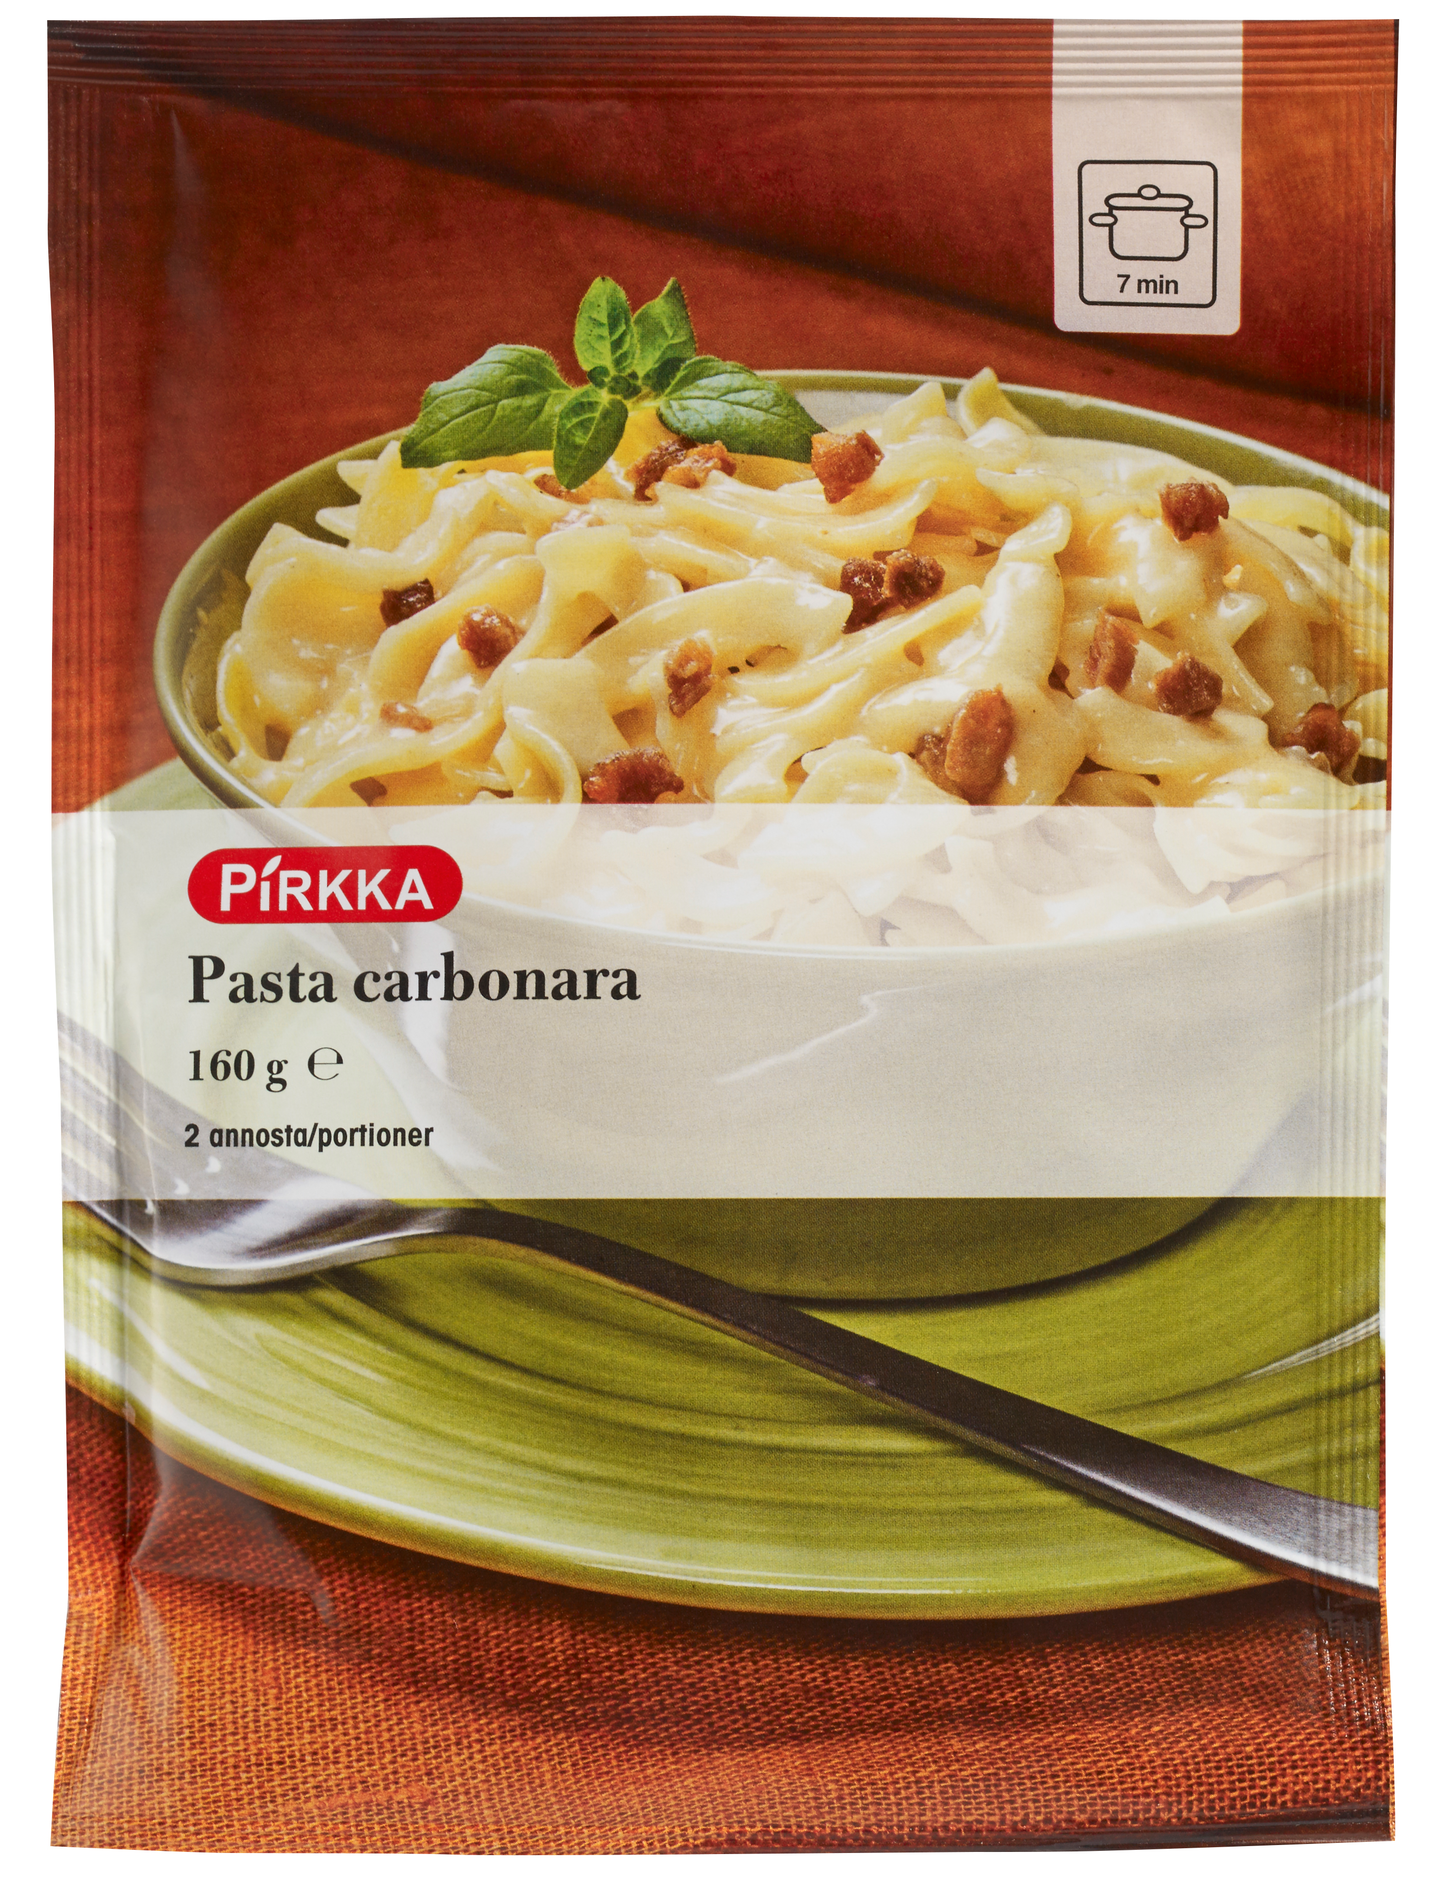 Pirkka pasta carbonara 160g | K-Ruoka Verkkokauppa